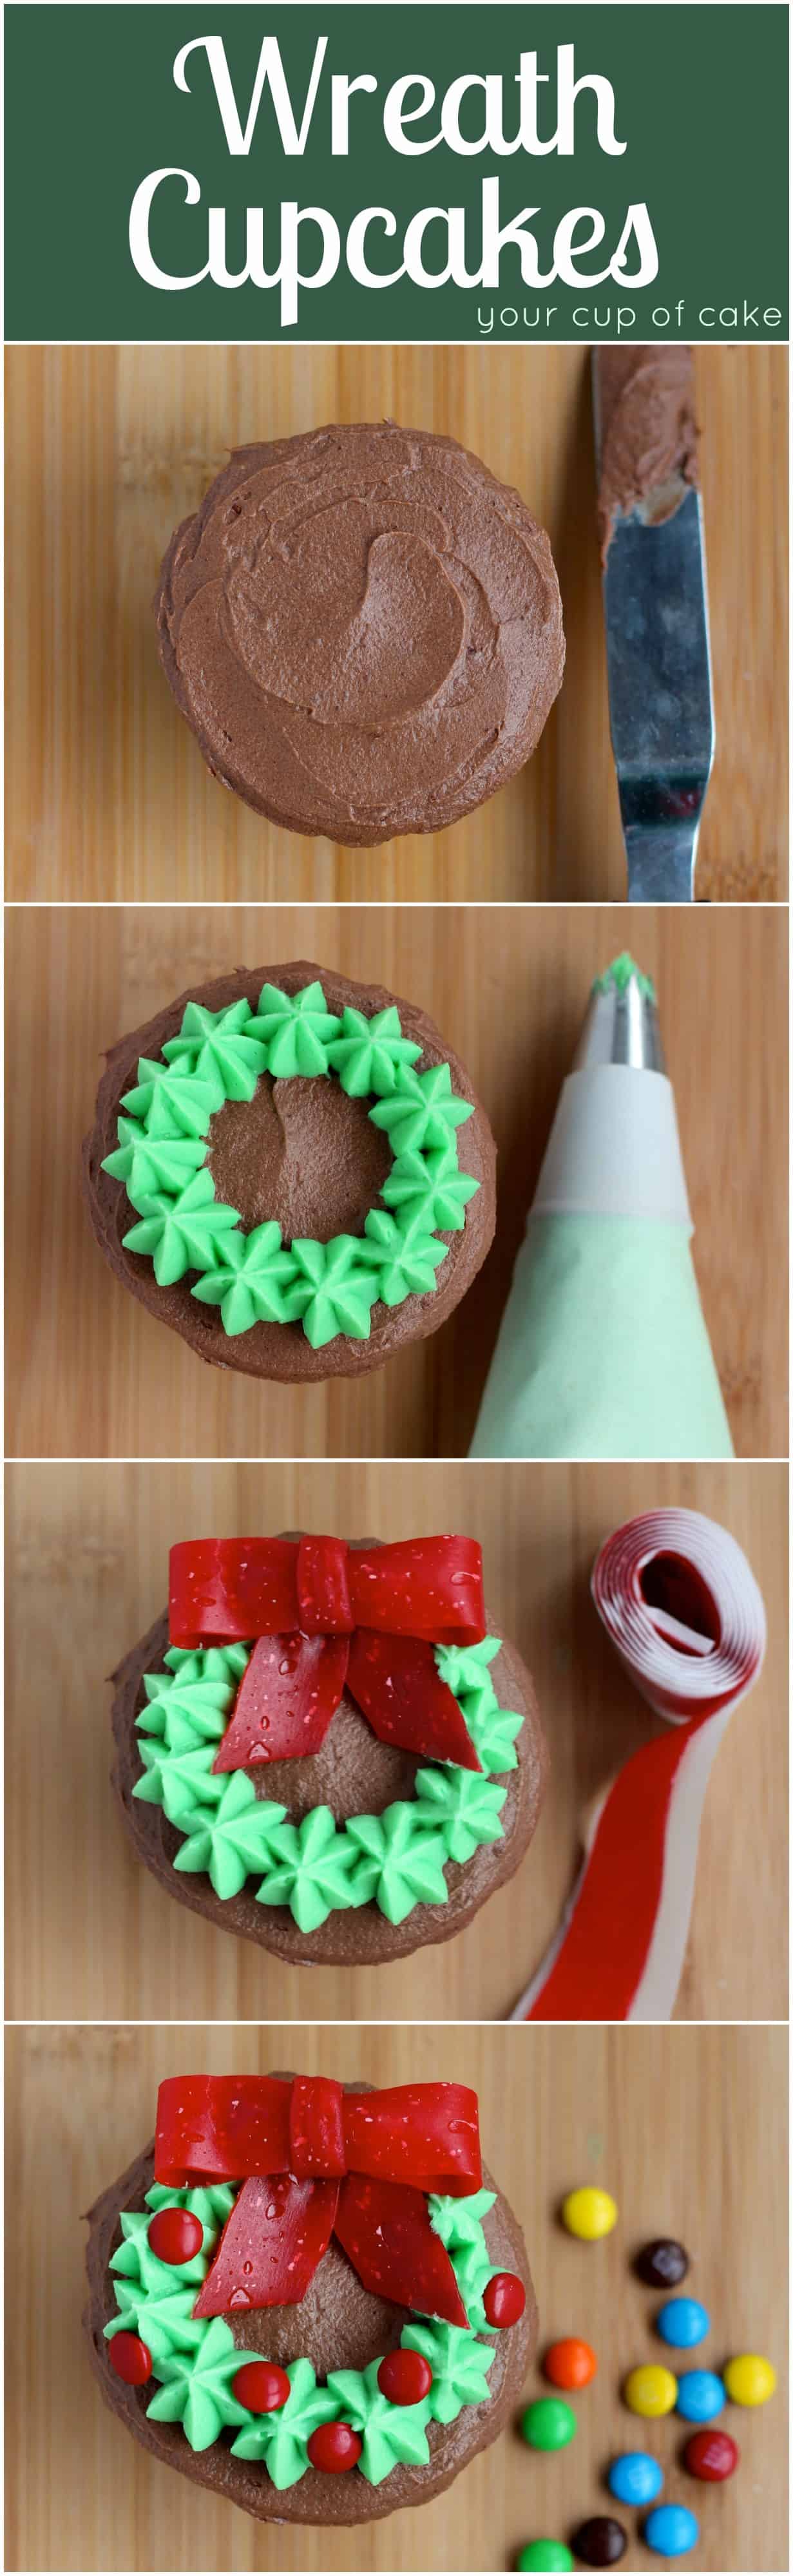 Christmas wreath cupcakes 15 Delicious Christmas Cupcake Ideas and Recipes